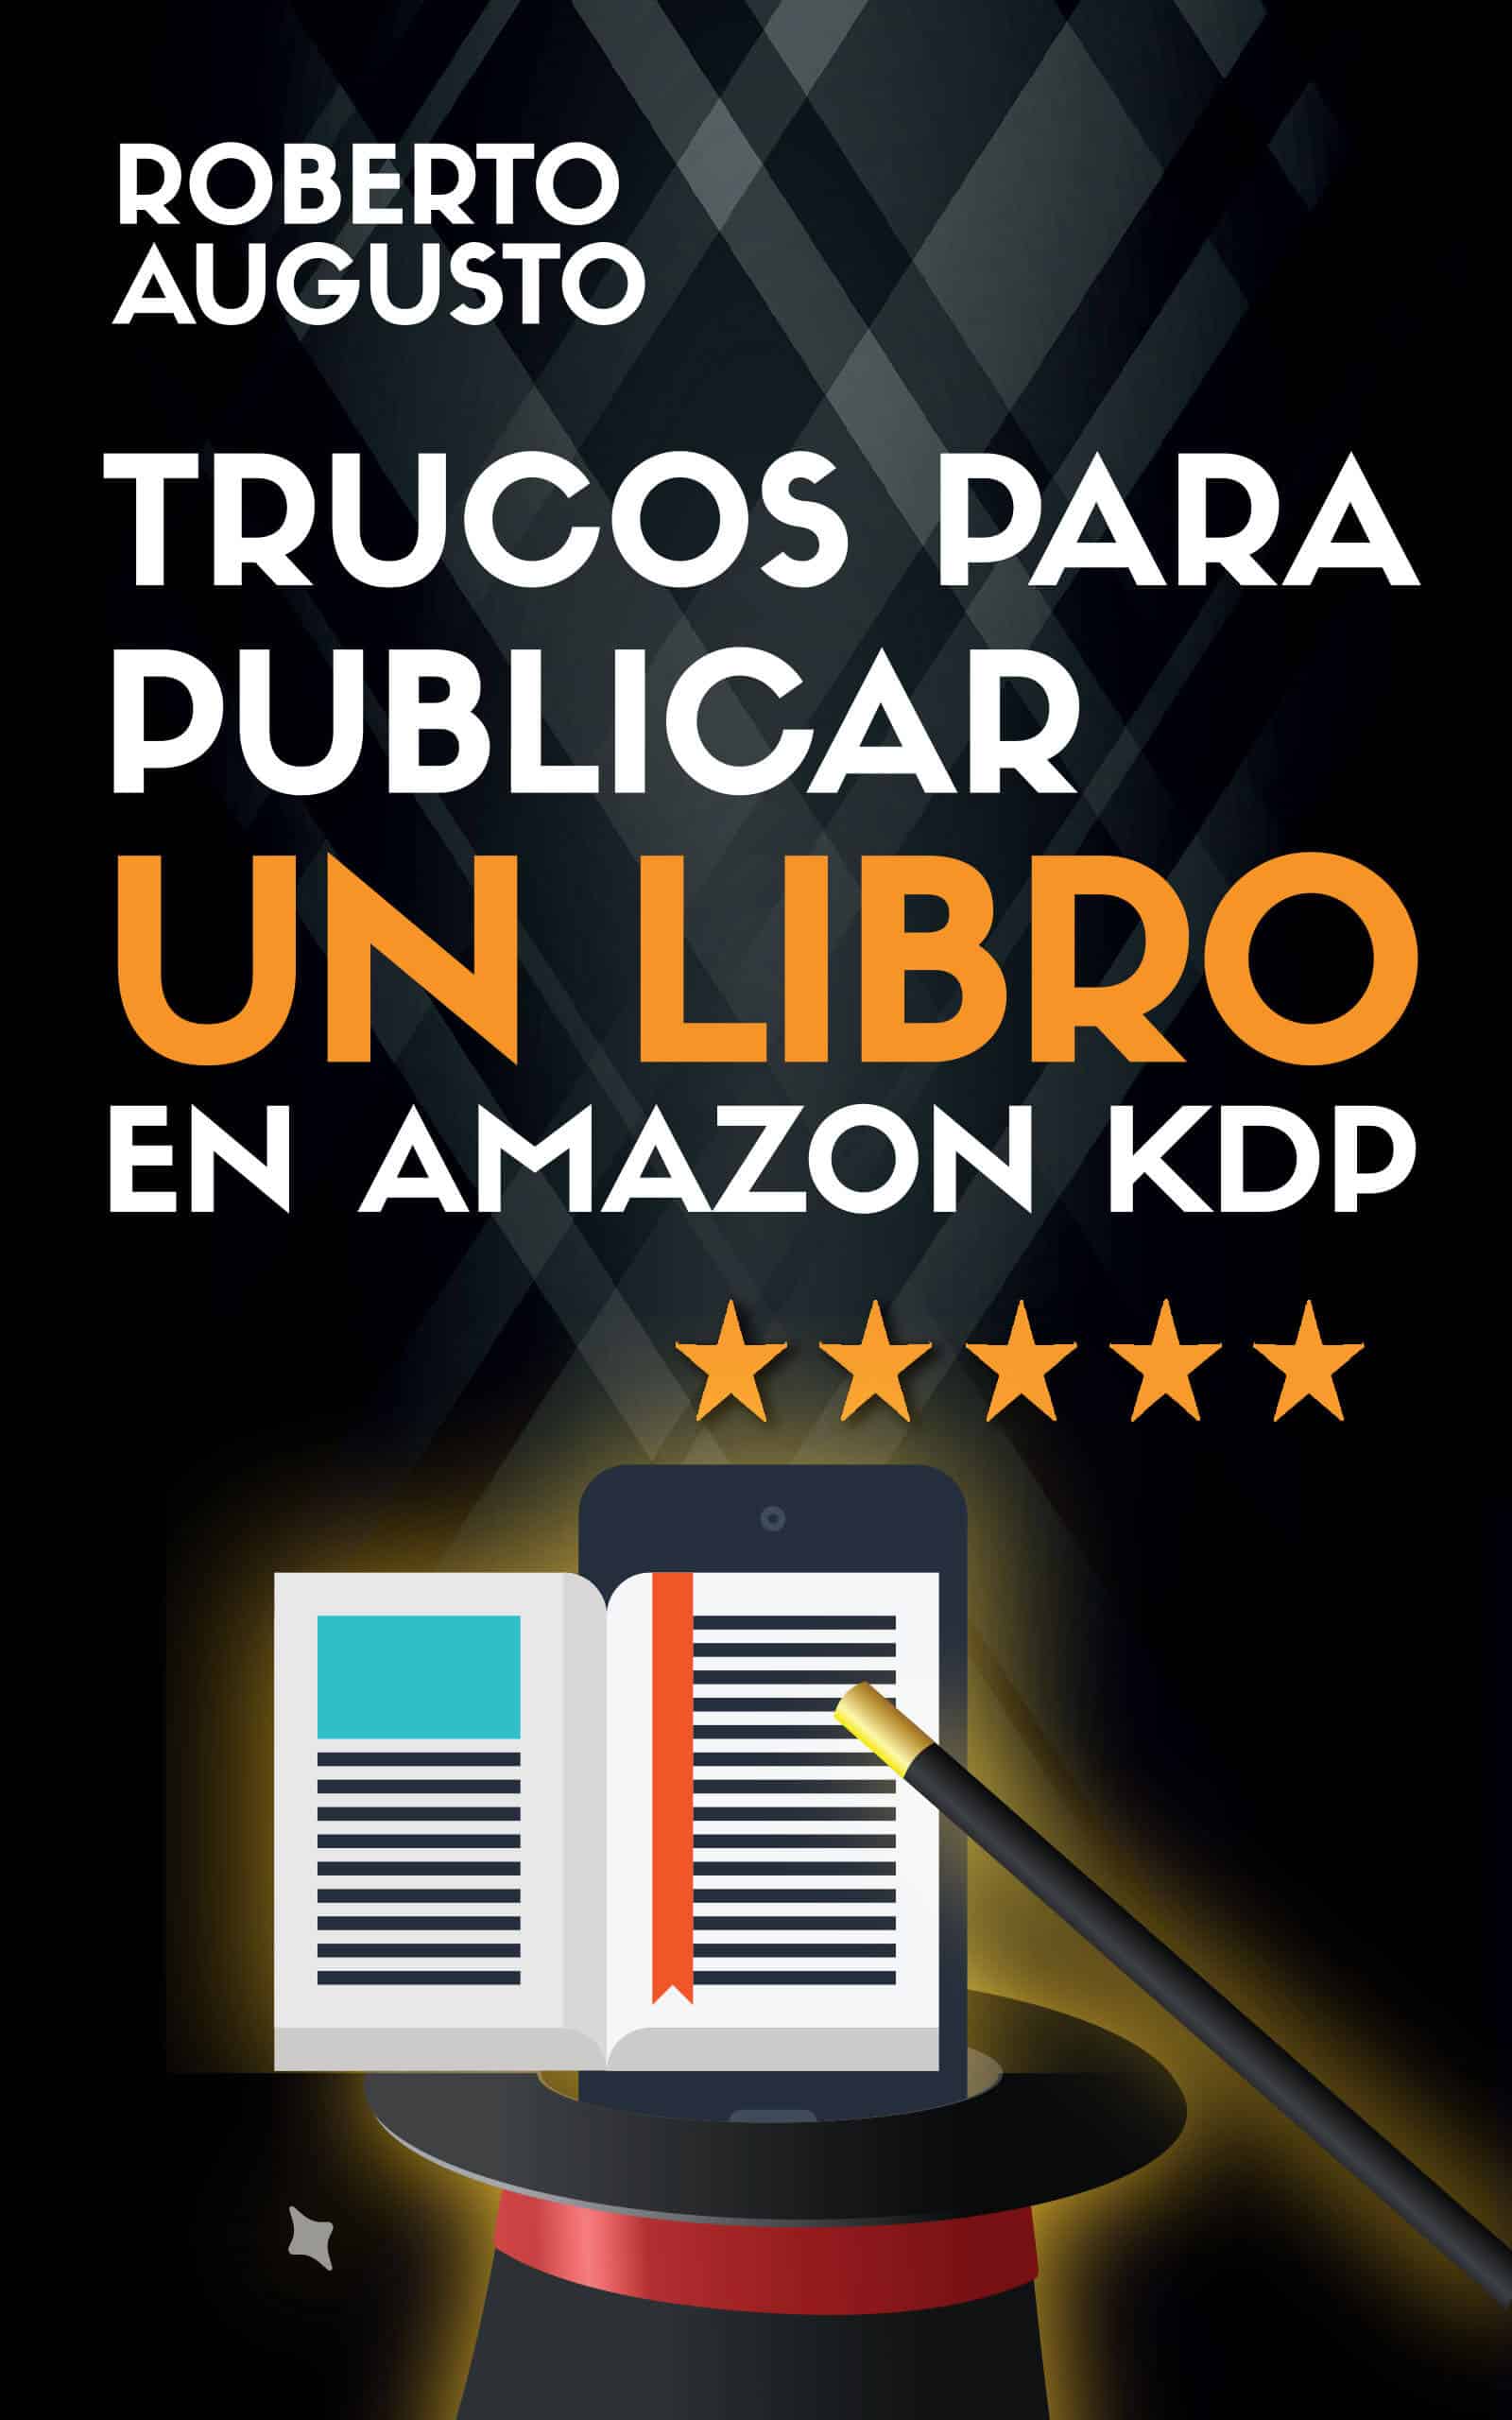 TRUCOS PARA PUBLICAR UN LIBRO EN AMAZON KDP